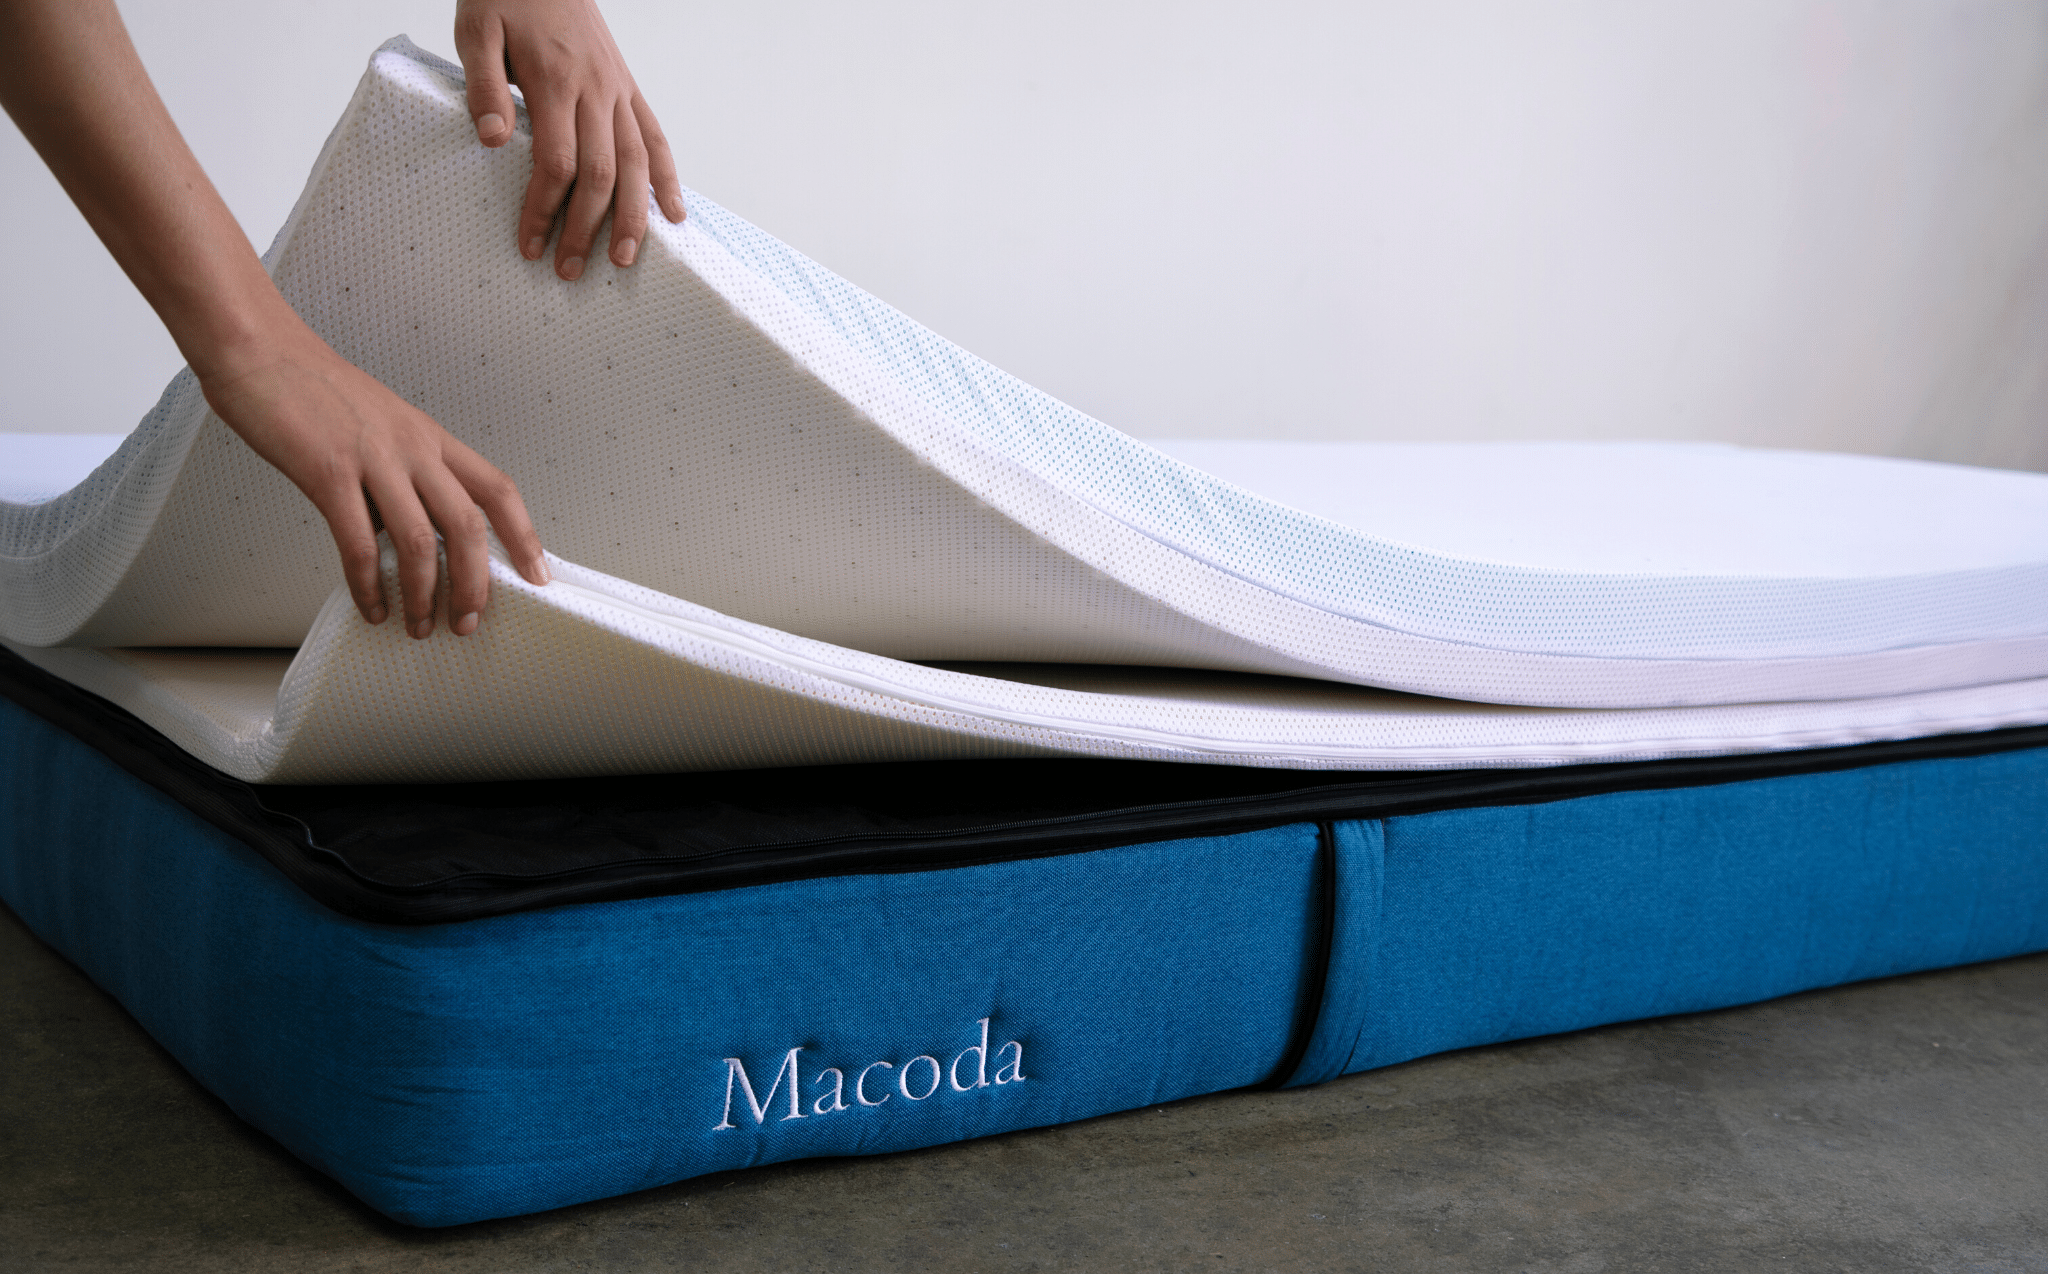 Macoda Mattress-Macoda Mattress Discount Code-macoda mattress review